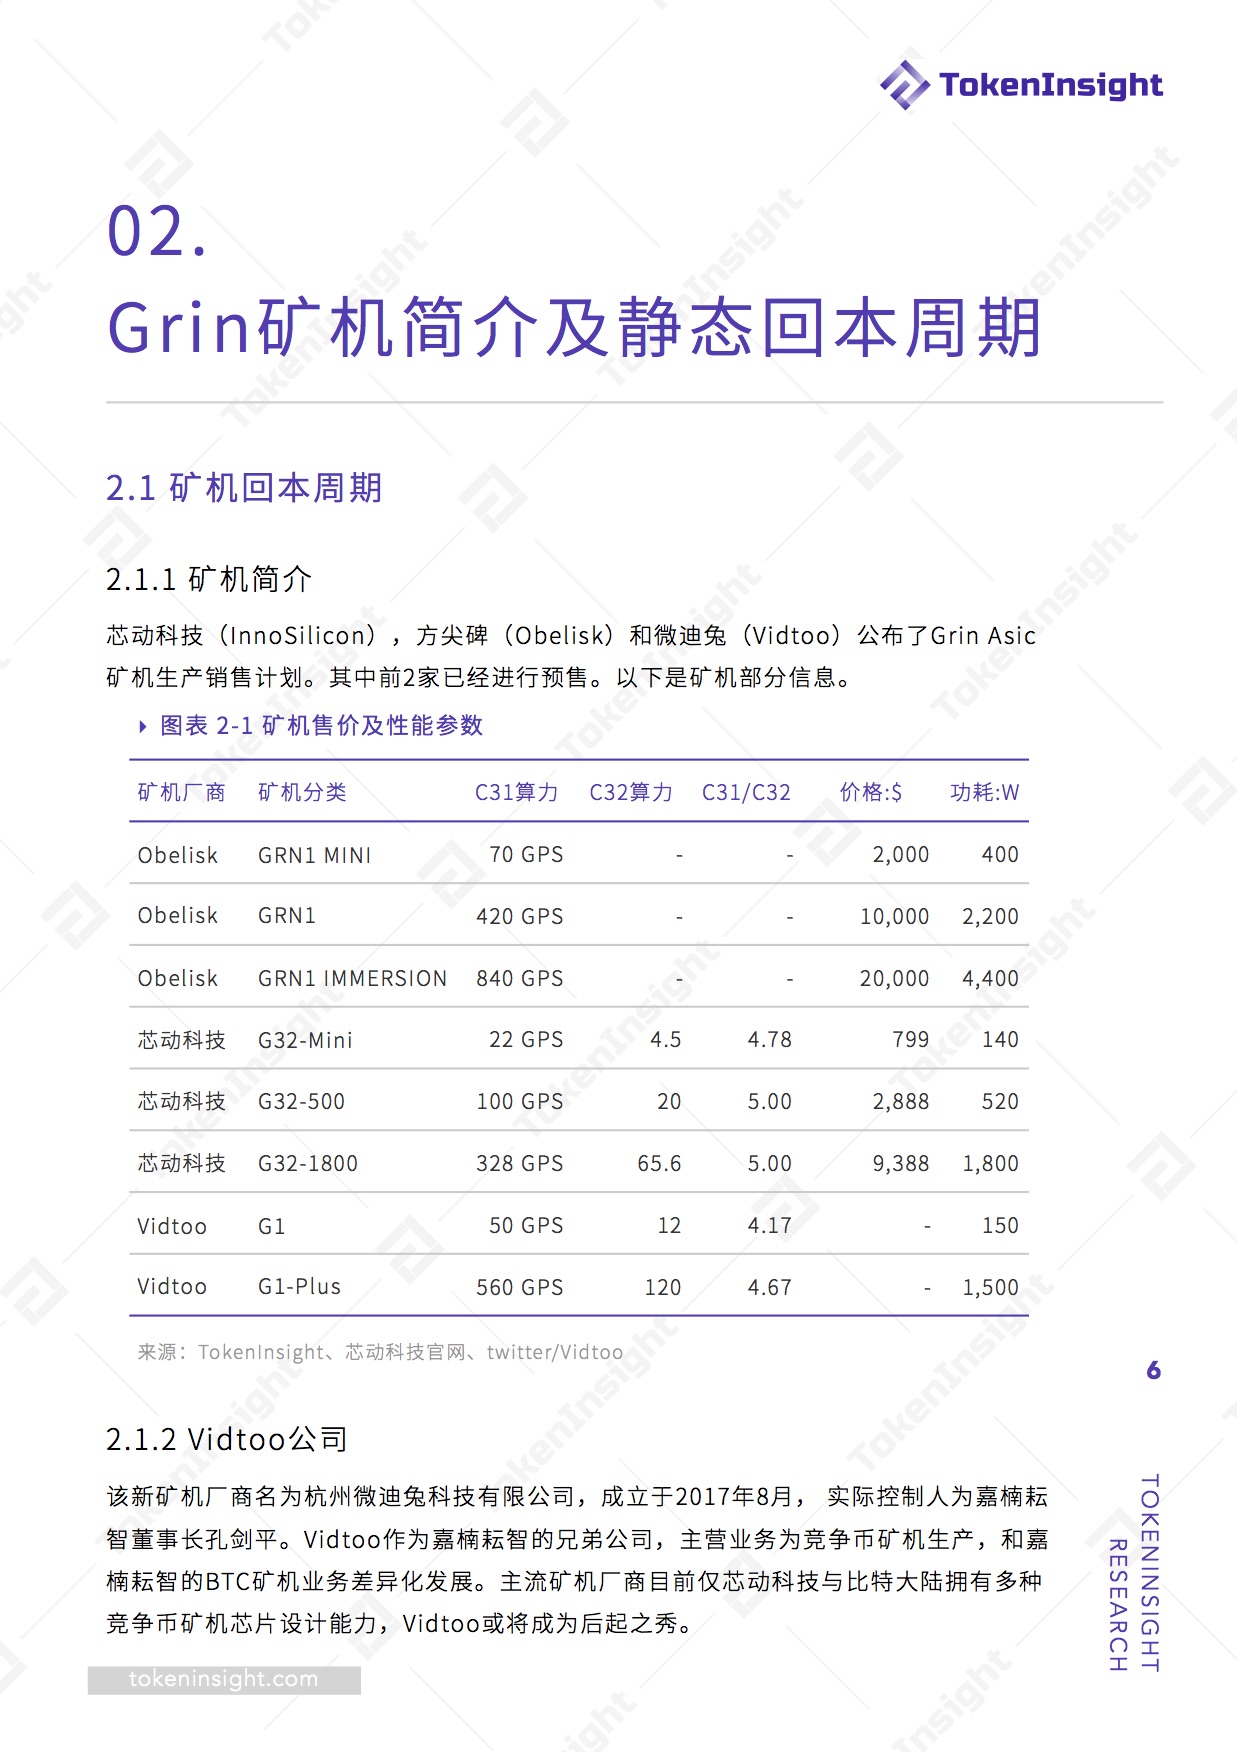 Grin矿机投资可行性分析报告 | TokenInsight配图(6)